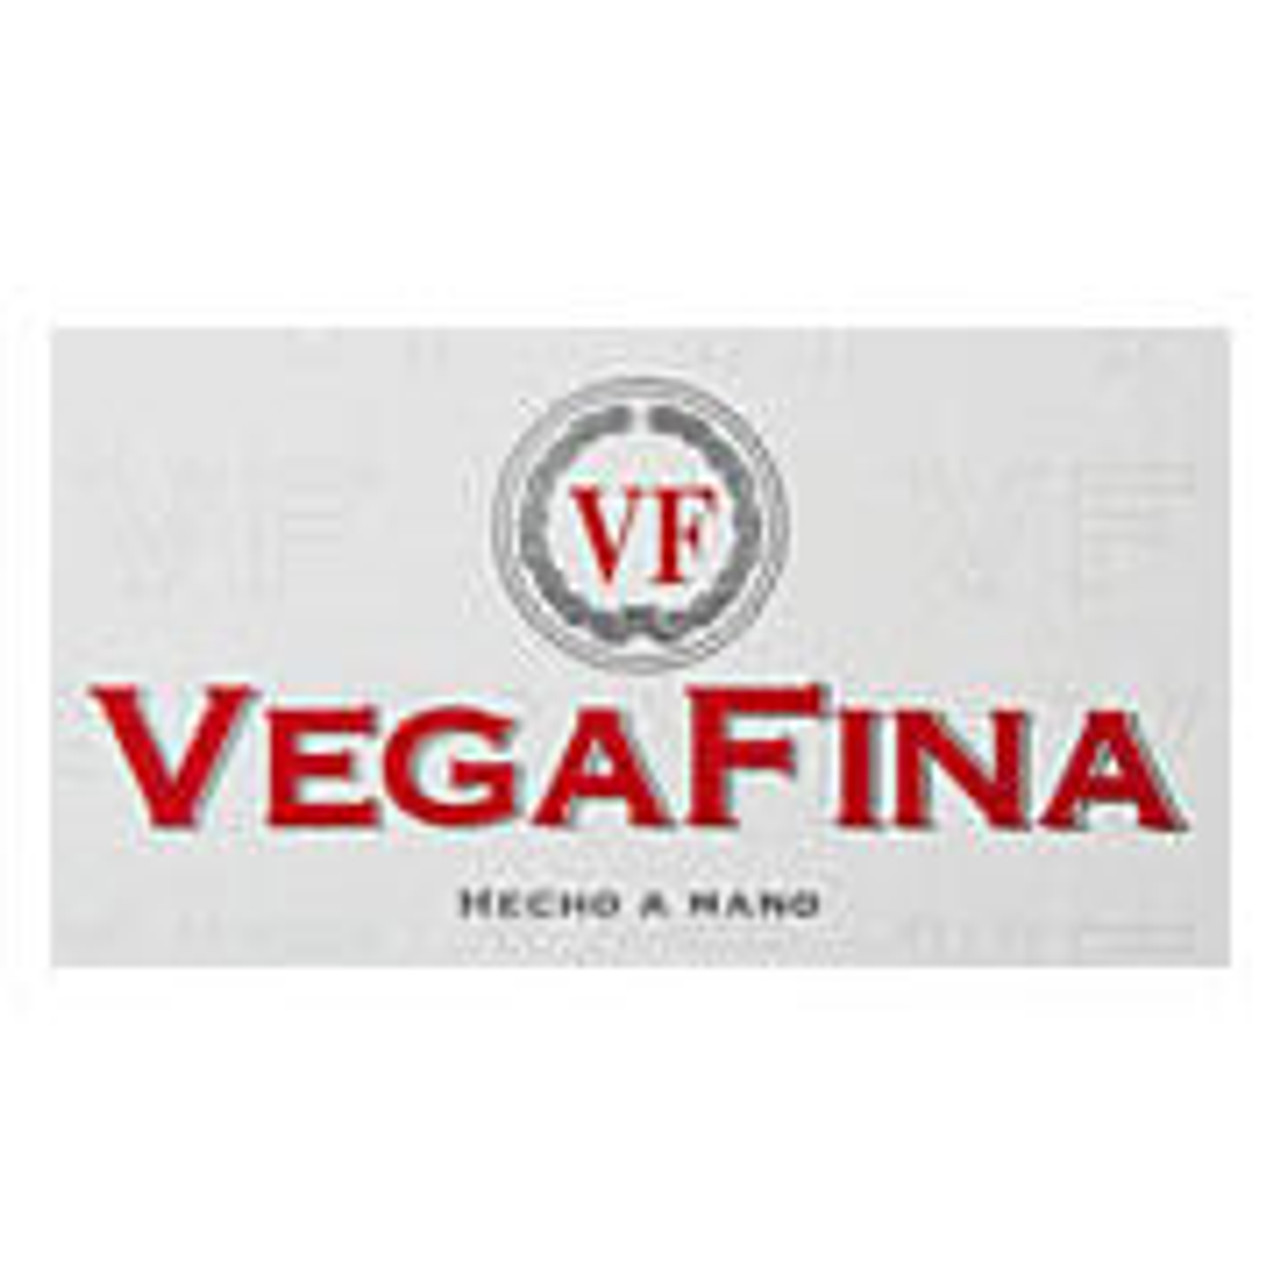 VegaFina Logo